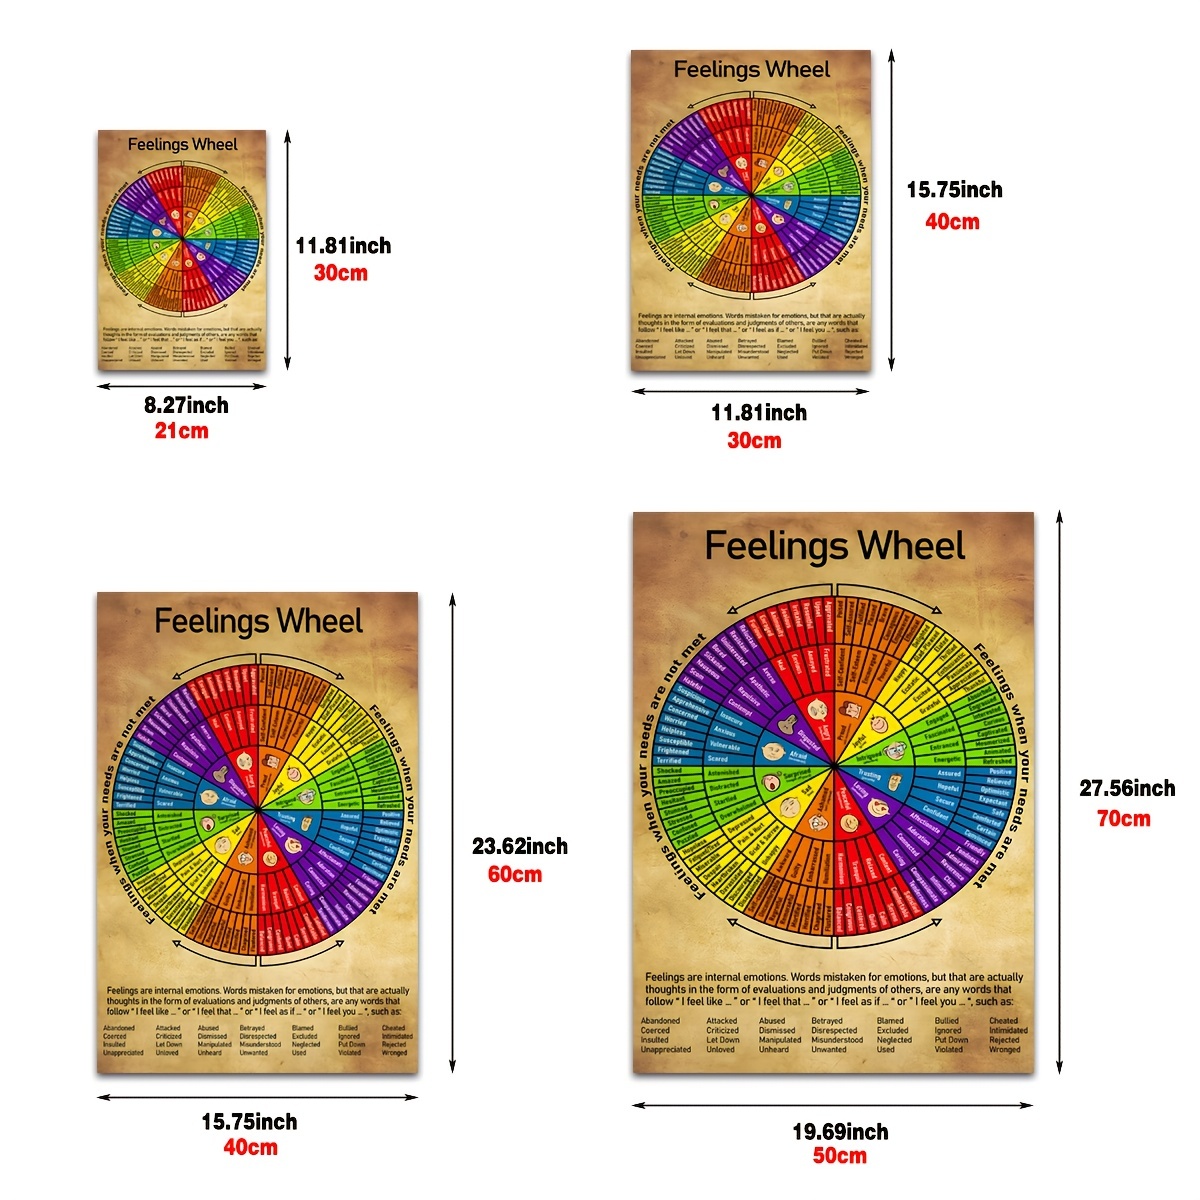 Color Wheel Poster, Art Classroom Decor, Color Wheel Printable